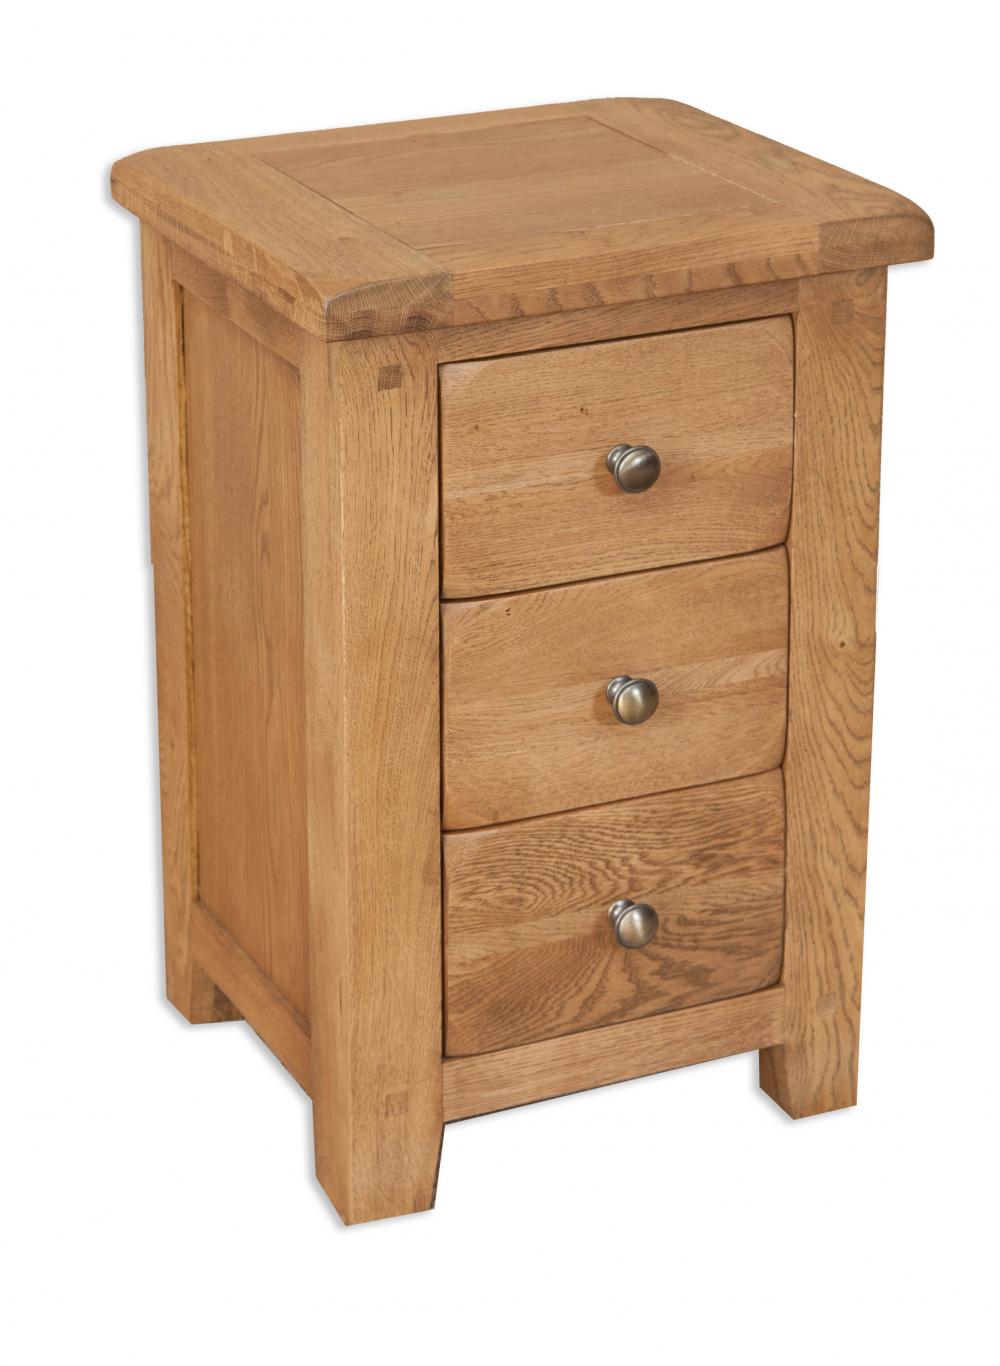 Country Oak 3 Drawer Bedside Cabinet £229